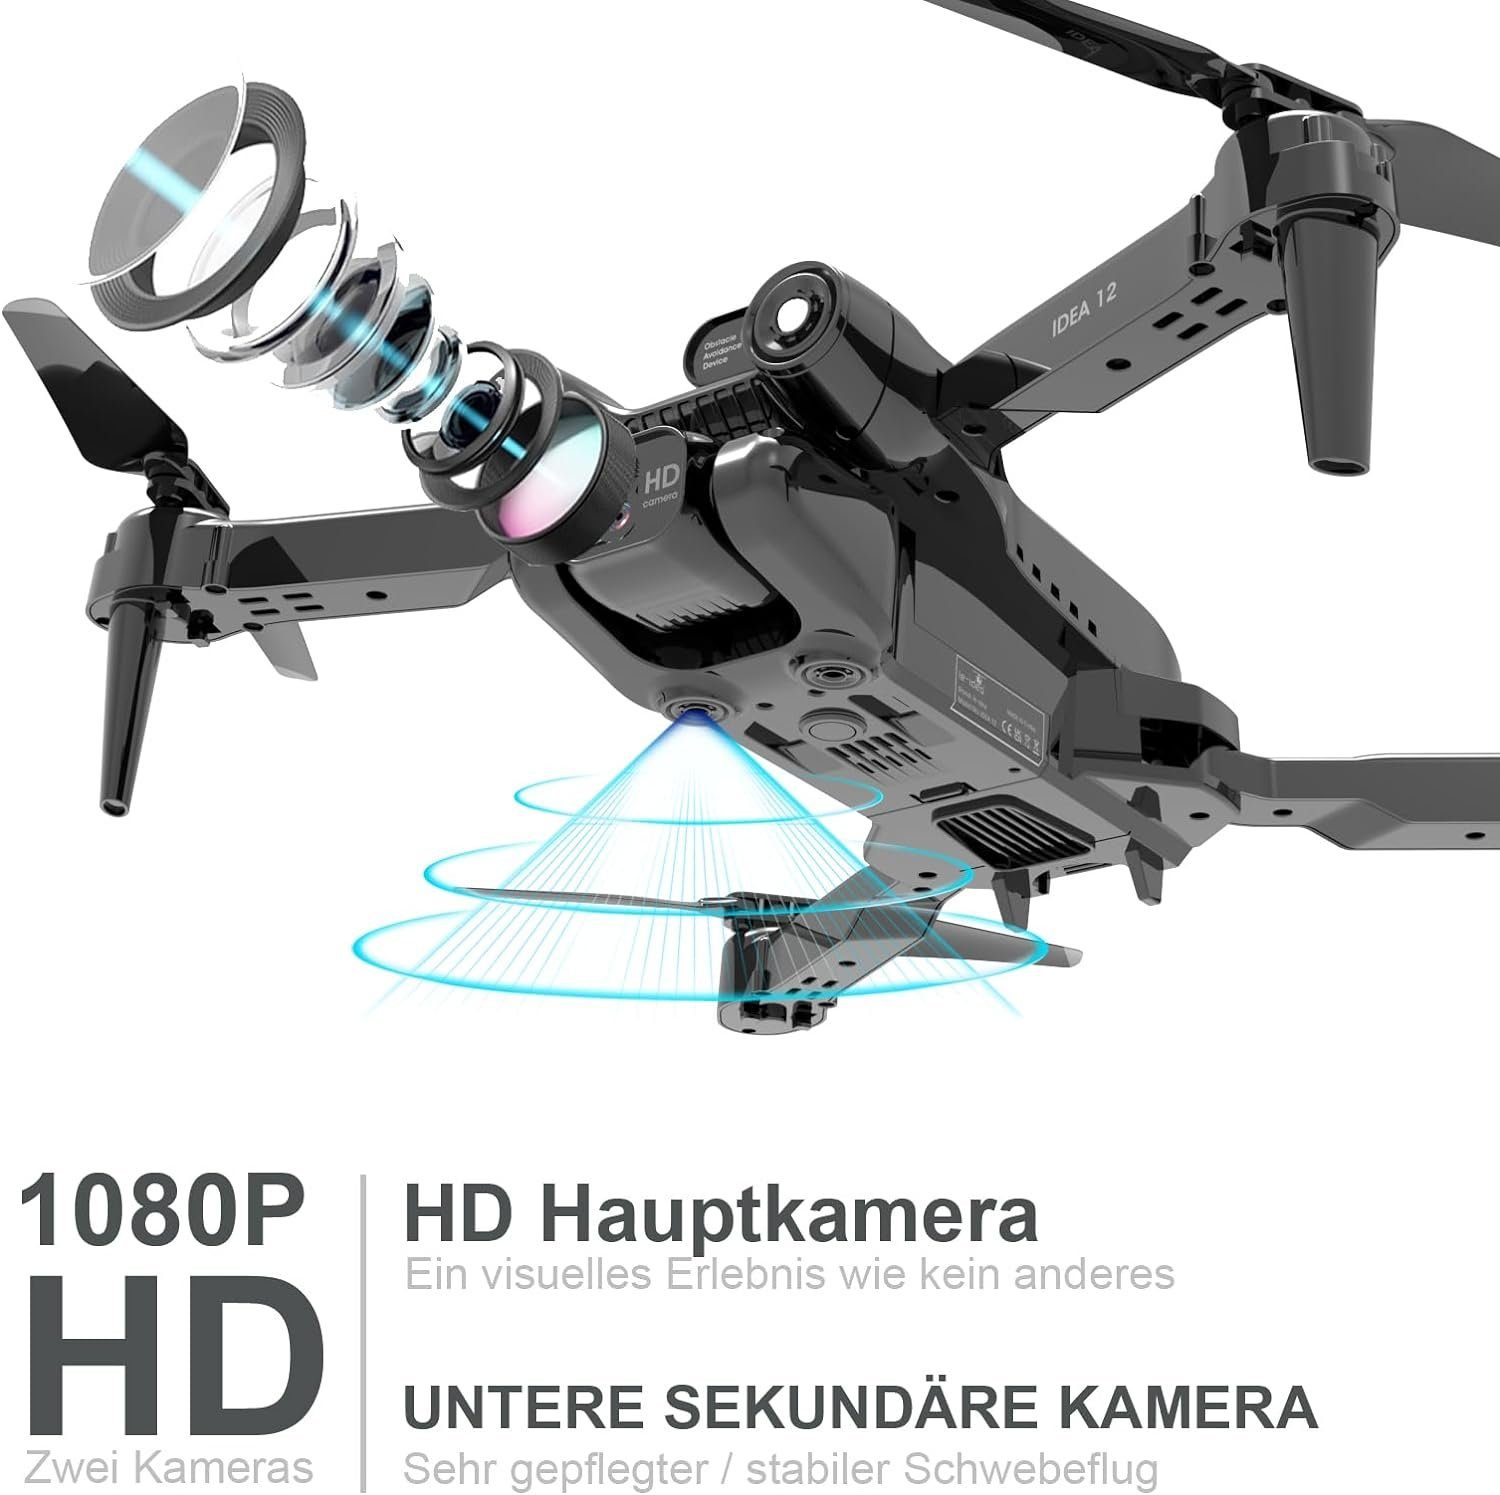 Drohne WIFI Kamera Verstellung Faltdrohnen Elektrische FPV Batterien) (1080P, 90° 2 le-idea